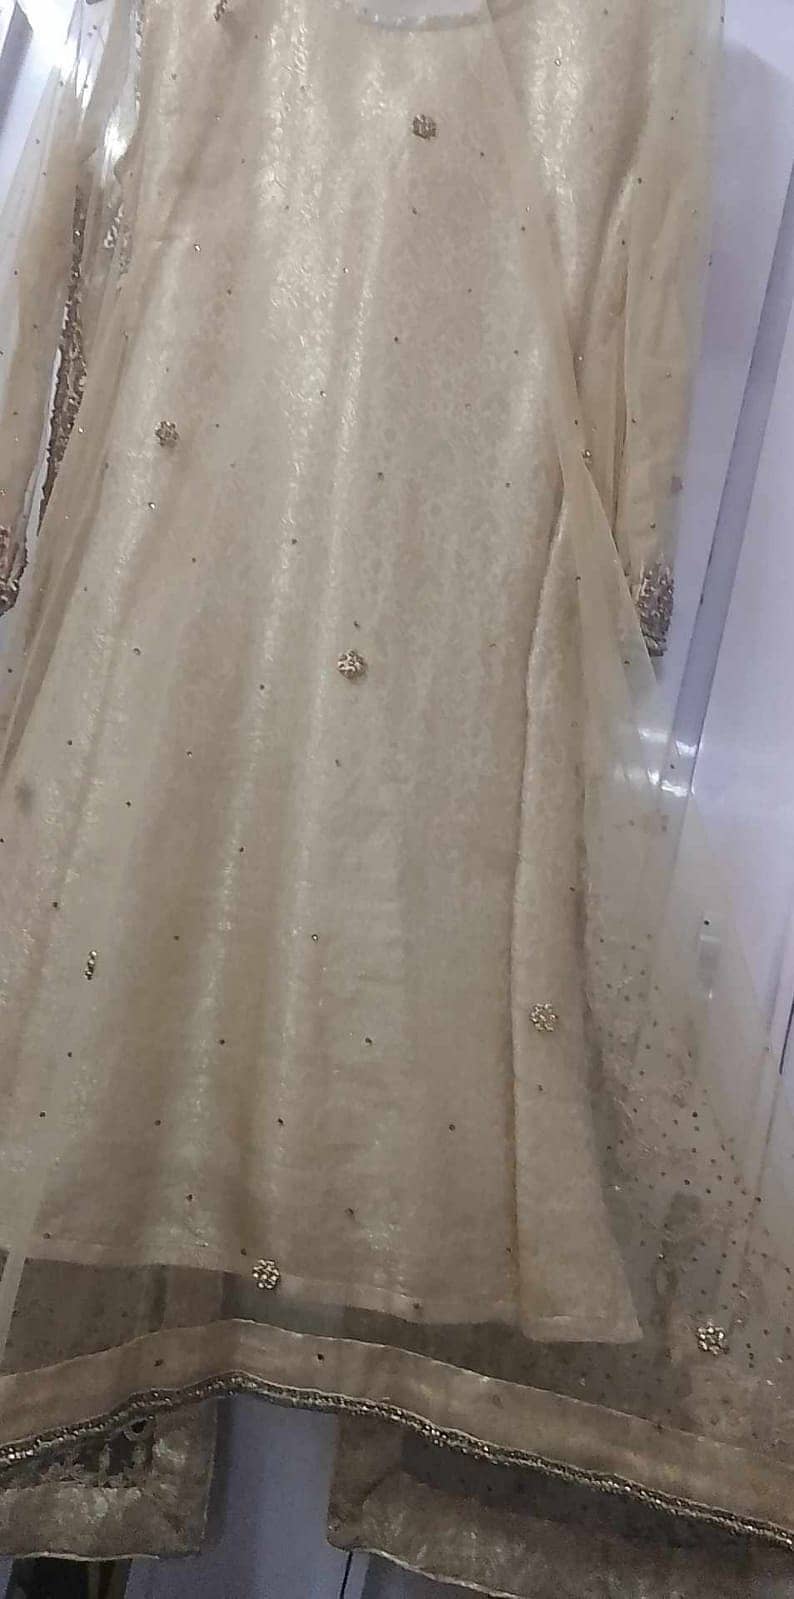 preloved Dresses for sale in reasonable price 4